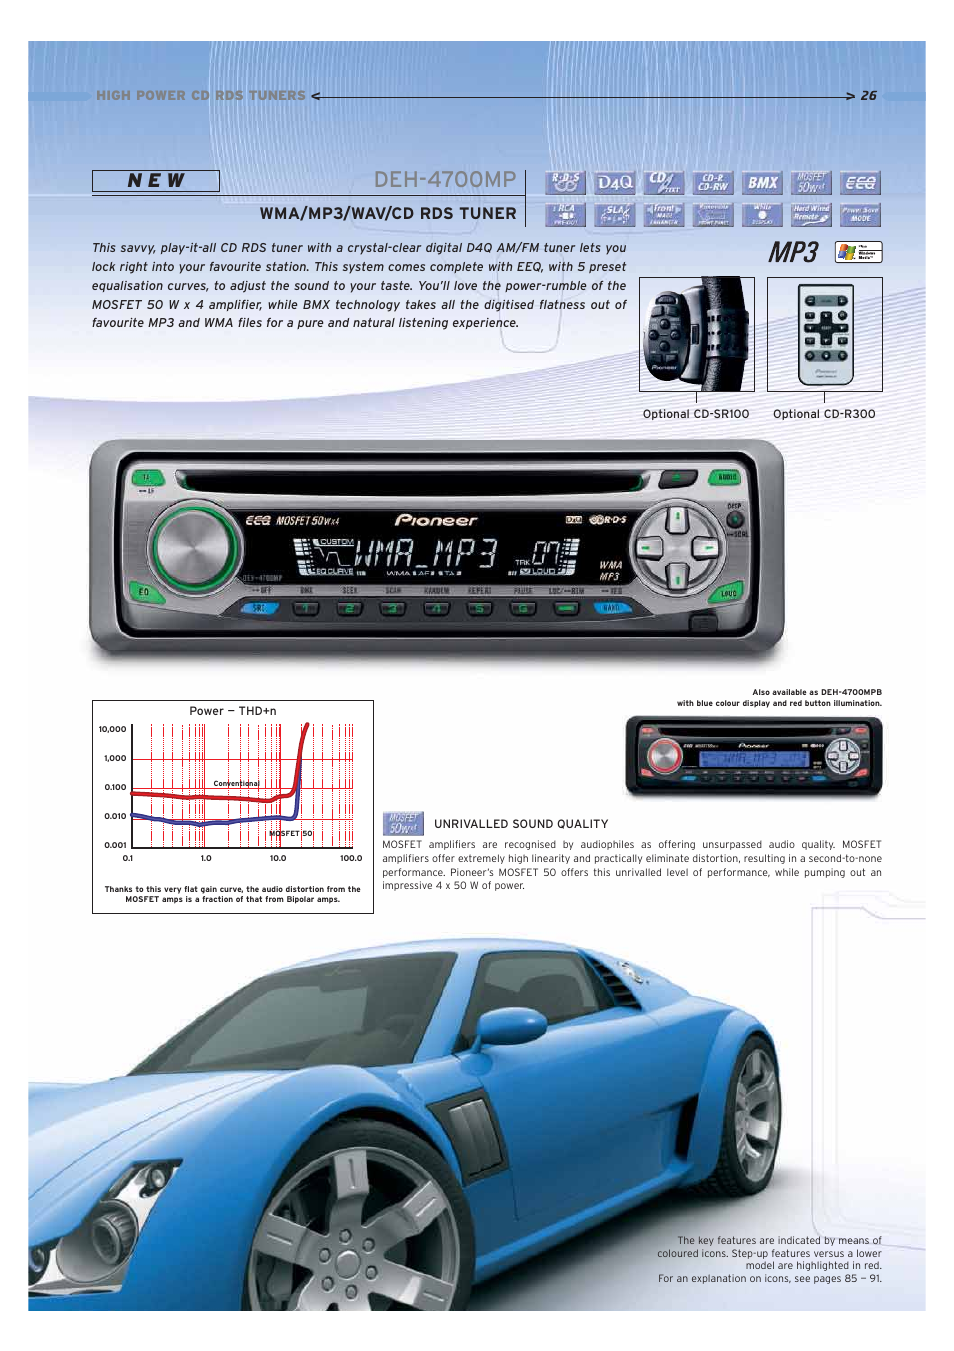 Deh-4700mp, N e w, Wma/mp3/wav/cd rds tuner | Pioneer Car CD MP3 Player  User Manual | Page 26 / 39 | Original mode